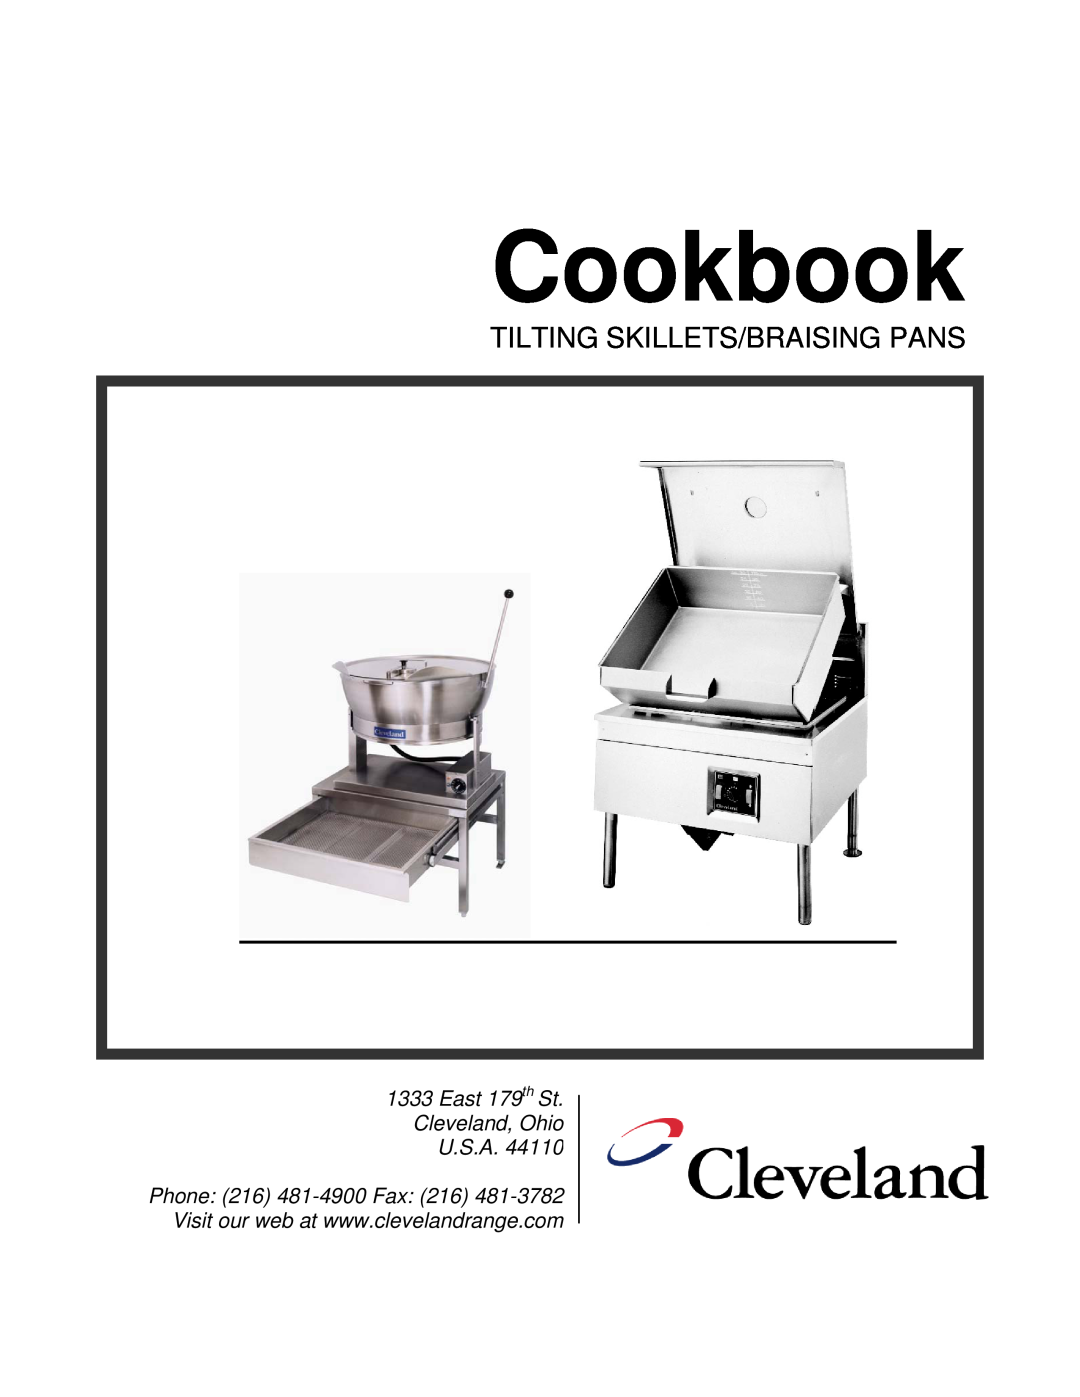 Cleveland Range Skillet/Braising manual Cookbook, Tilting Skillets/Braising Pans, East 179th St Cleveland, Ohio U.S.A 